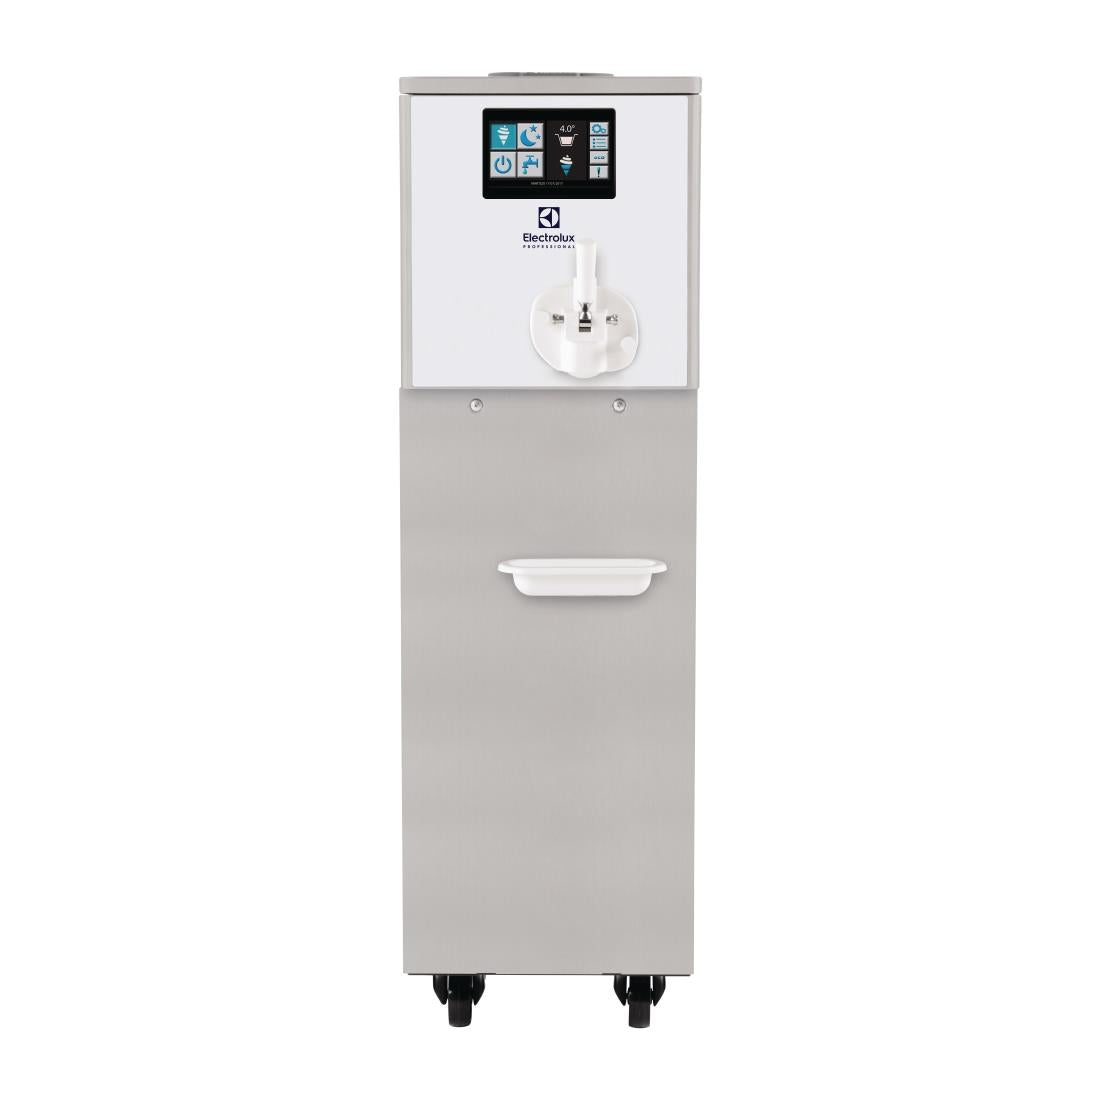 FT902 Electrolux Freestanding Soft Ice Cream Dispenser 11Ltr JD Catering Equipment Solutions Ltd